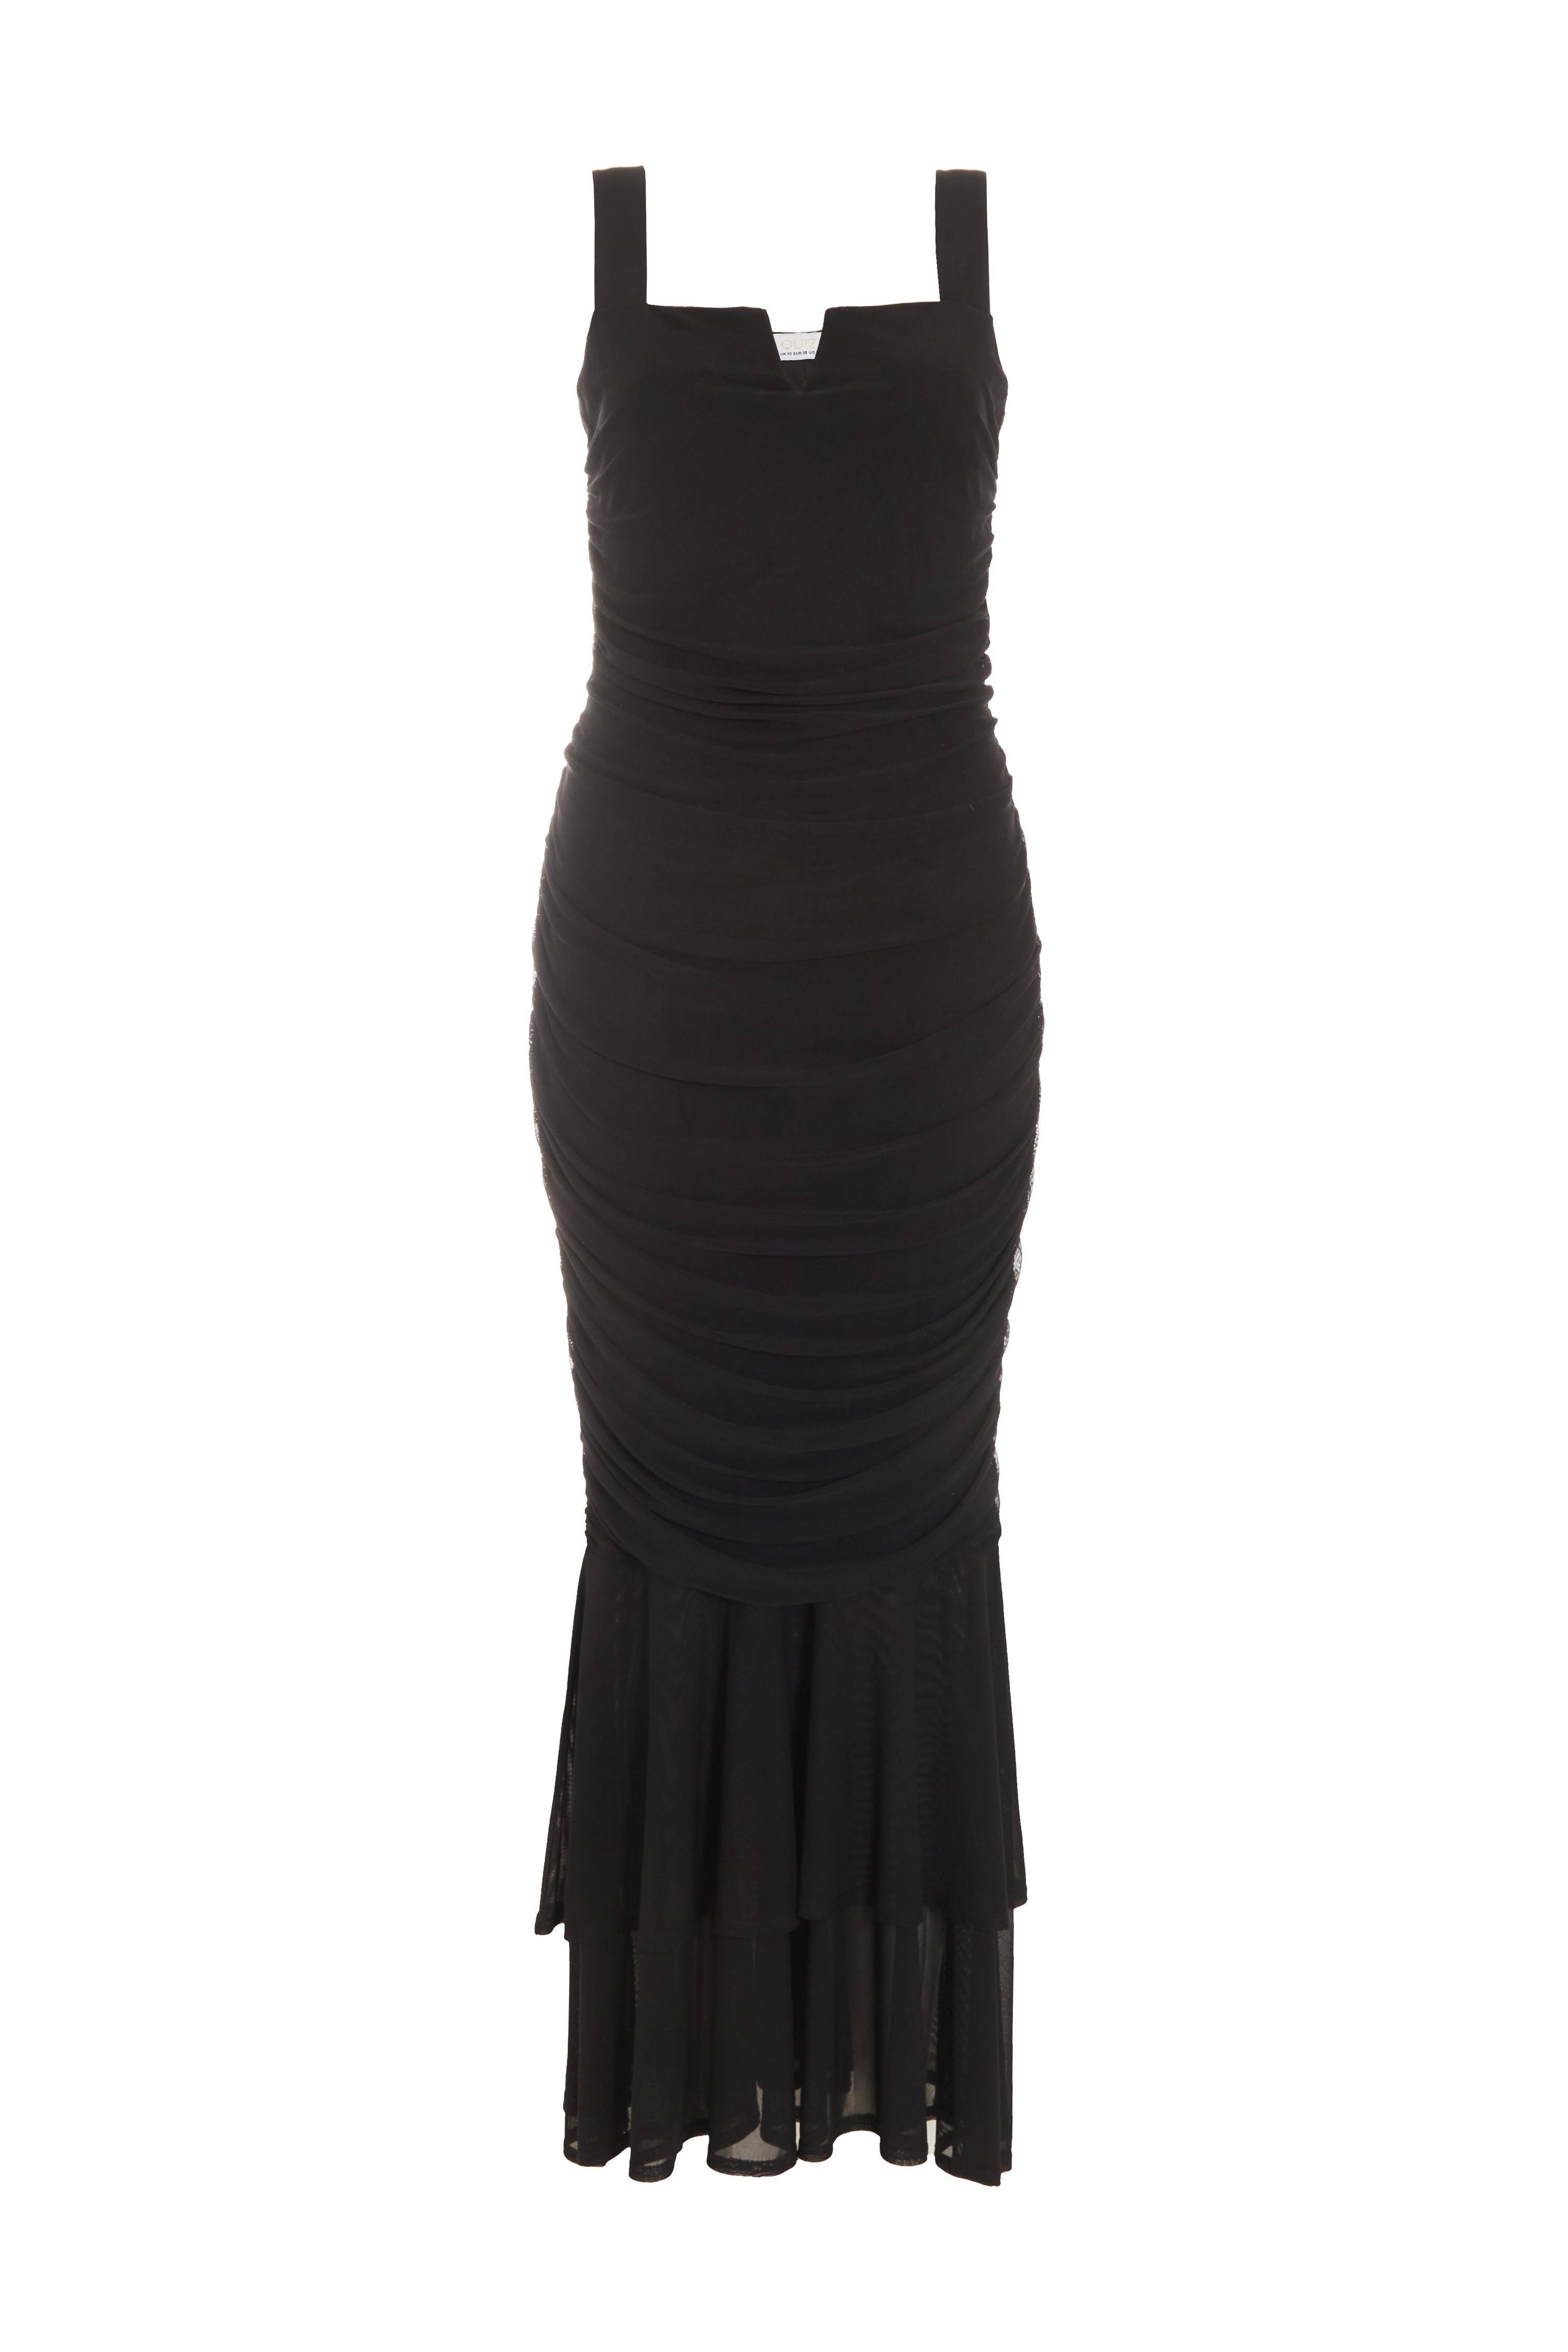 Chic Notch Neck Midi Black Dress | Image